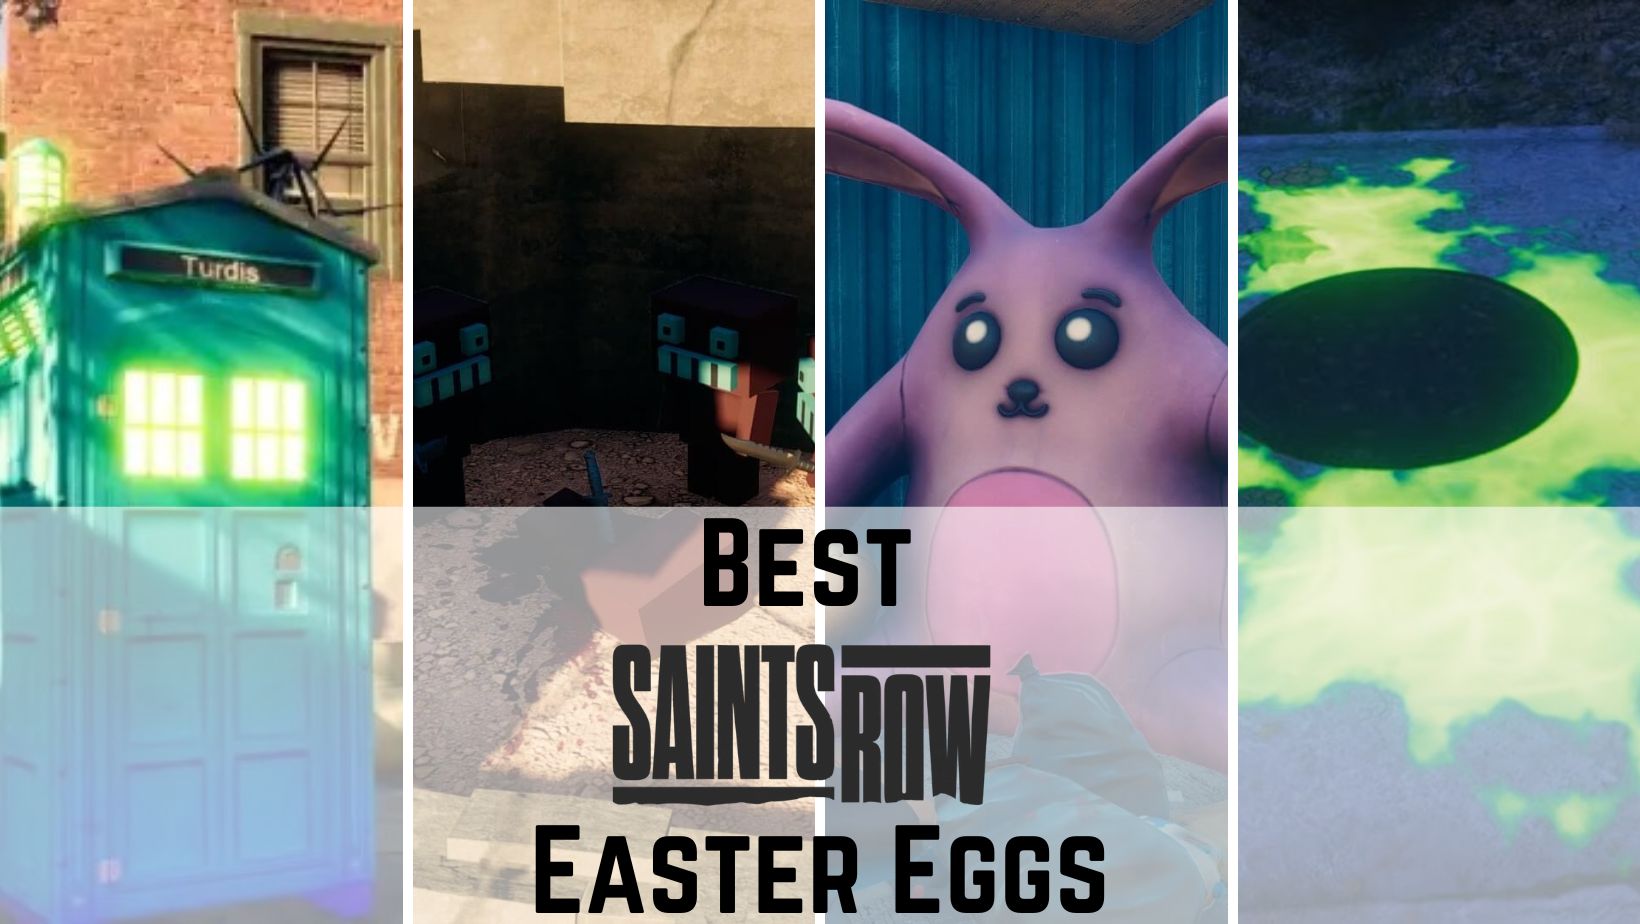 Best Saints Row Easter Eggs